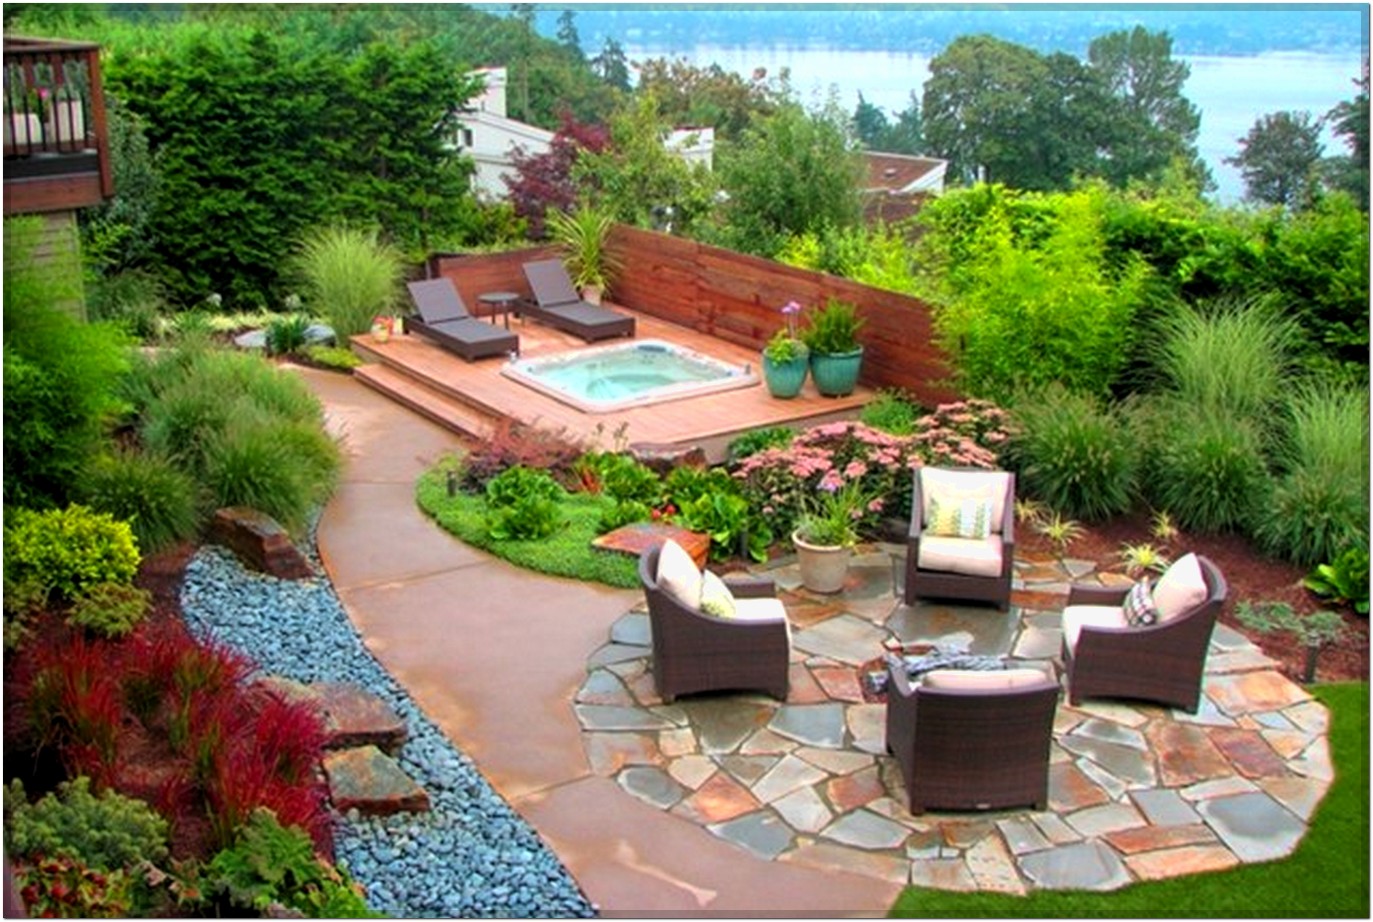 Cool Backyard Landscape Ideas That Make You Home As A Castle 7 Interior Design Inspirations